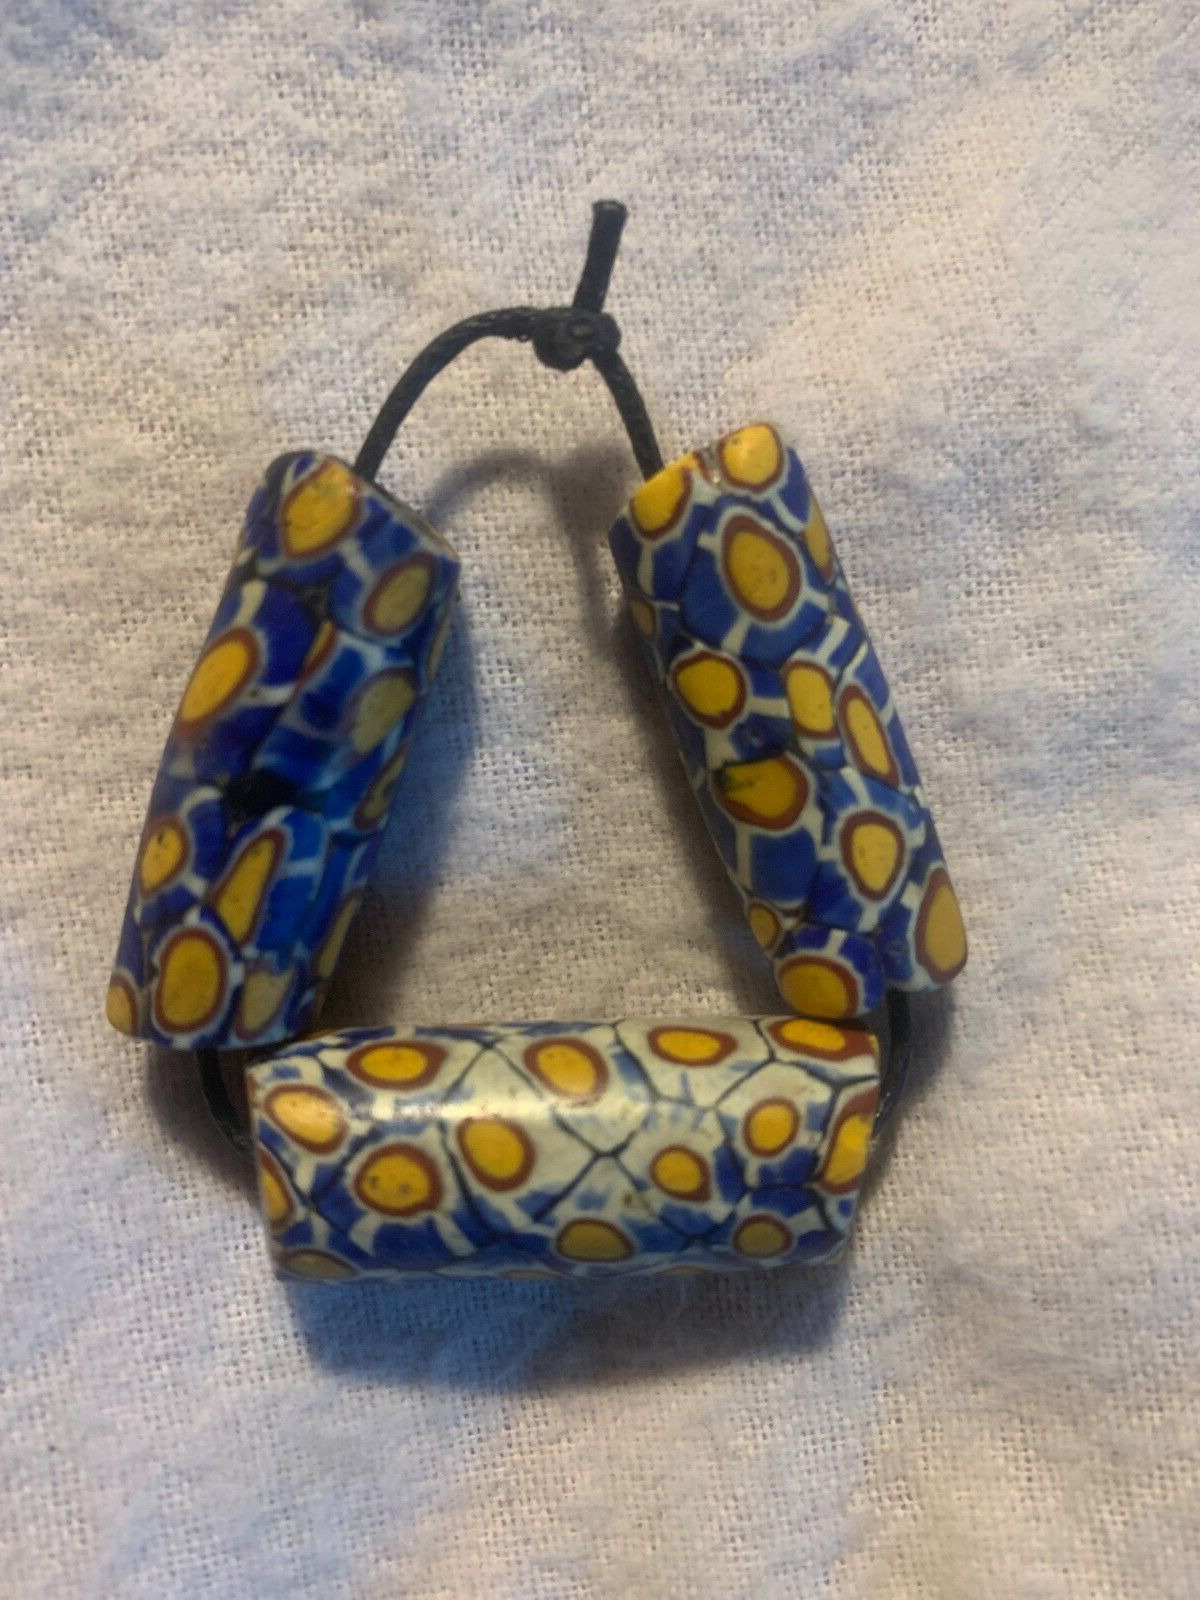 Antique Vintage Venetian - African Trade Beads - millefiori Italian glass